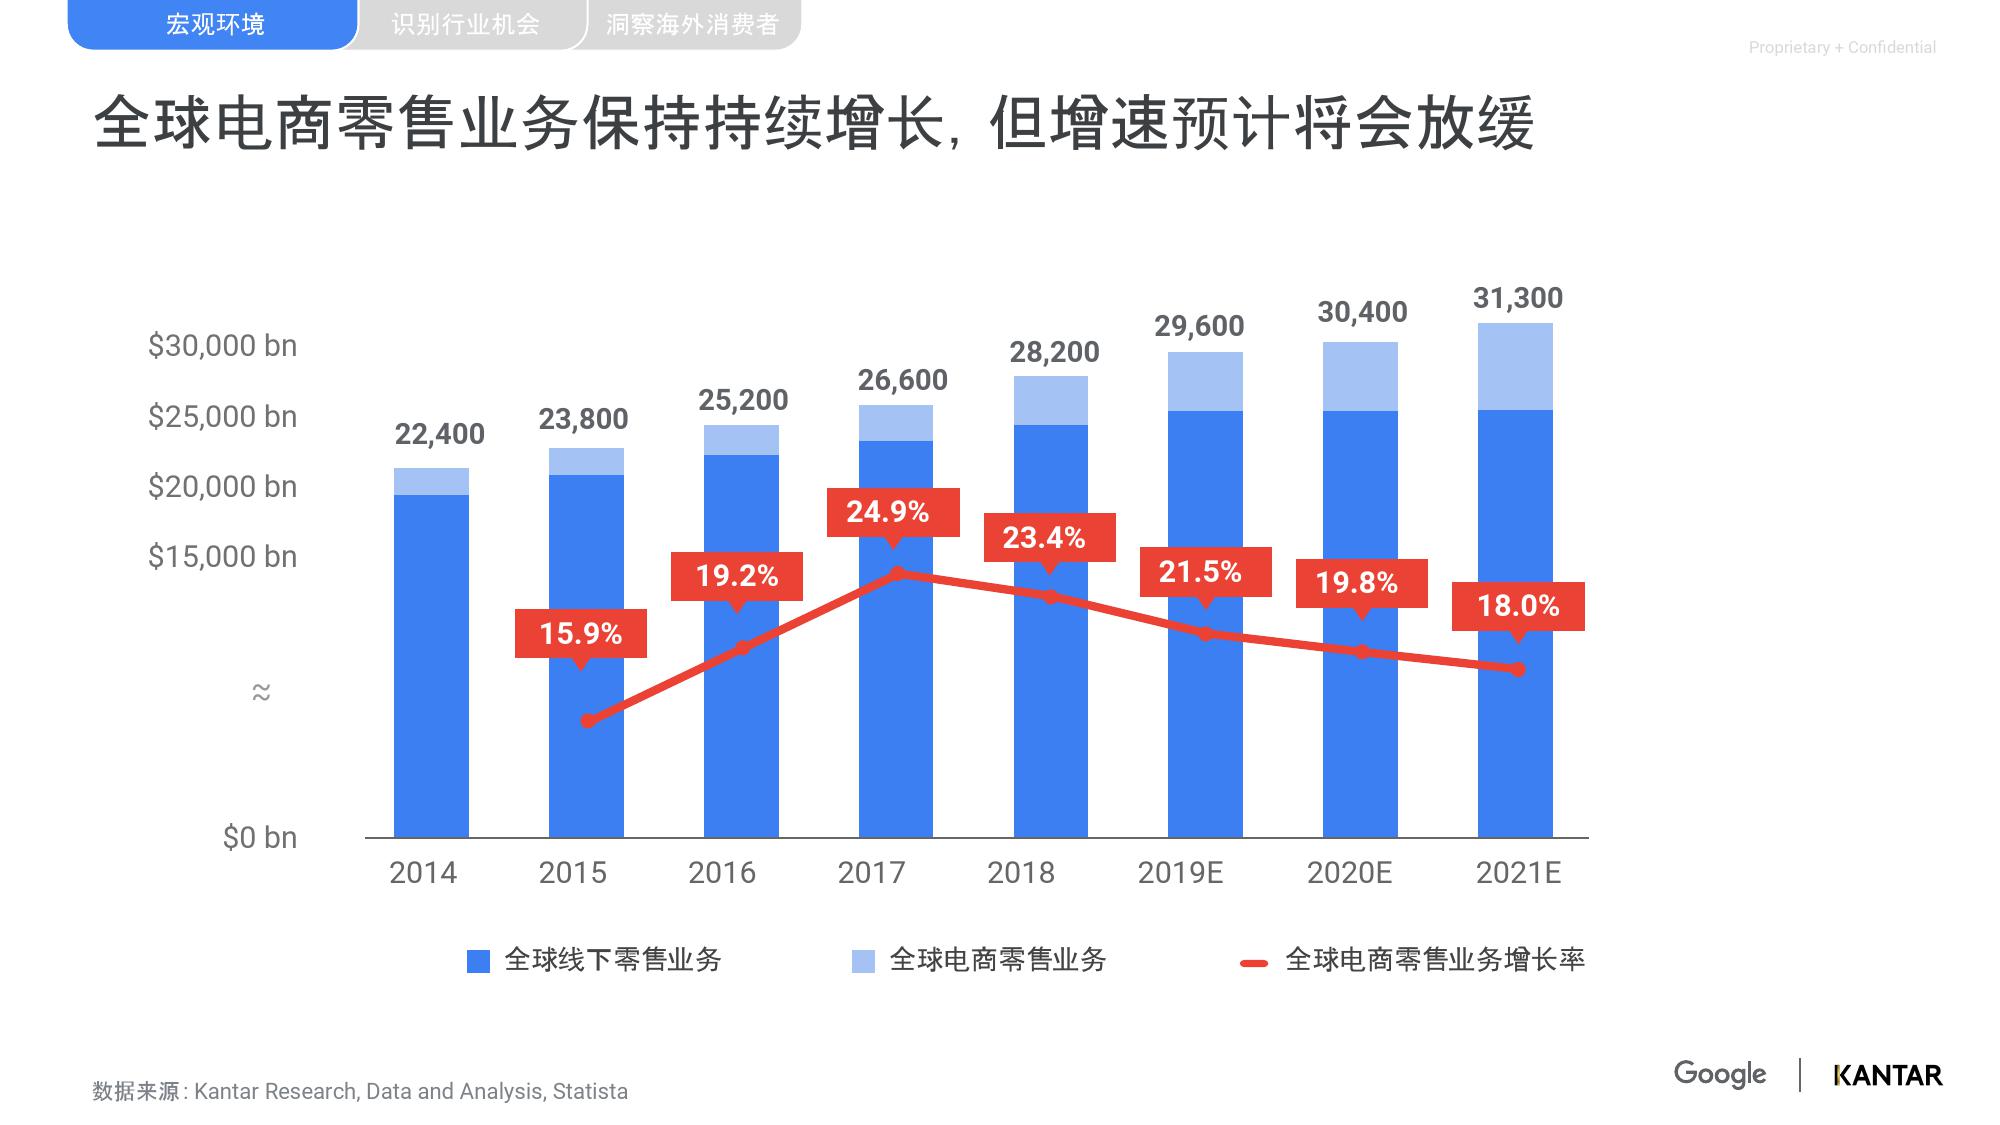 Kantar&Google：2019中国跨境电商机遇与增长报告